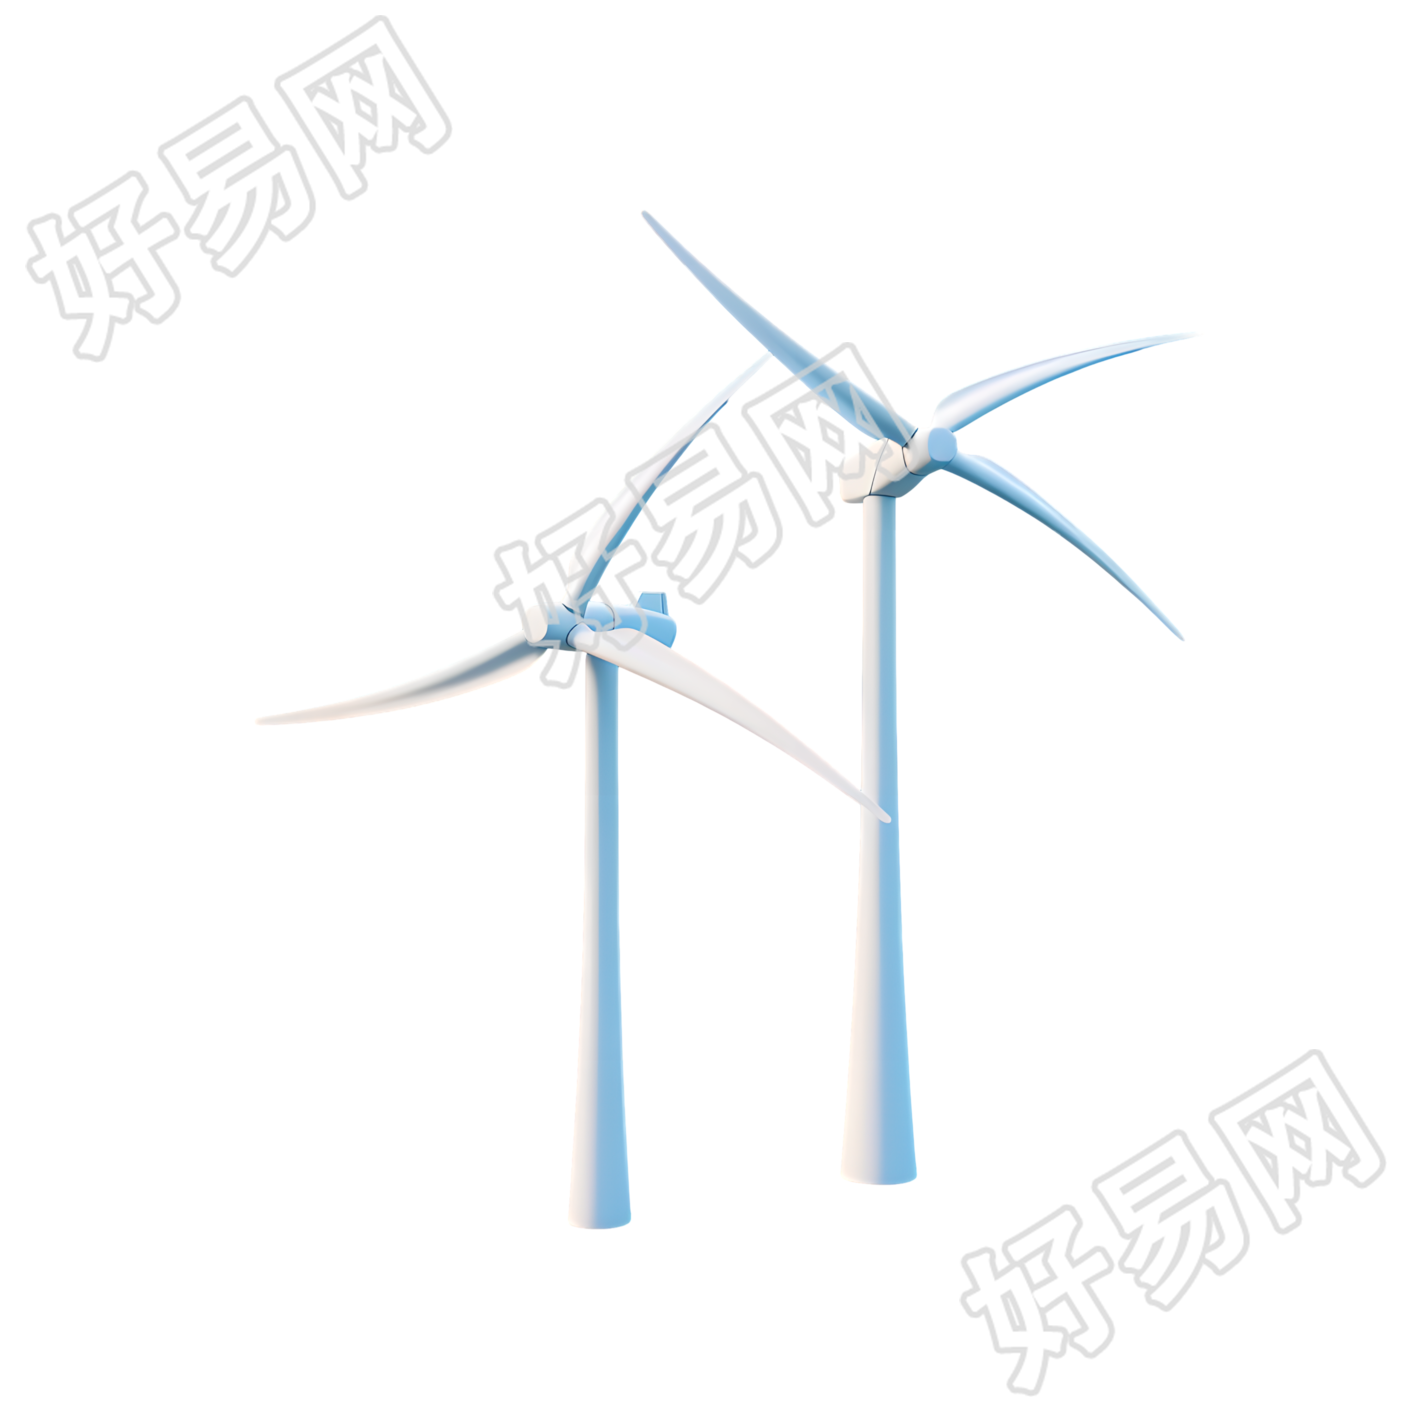 3D新能源风力发电素材